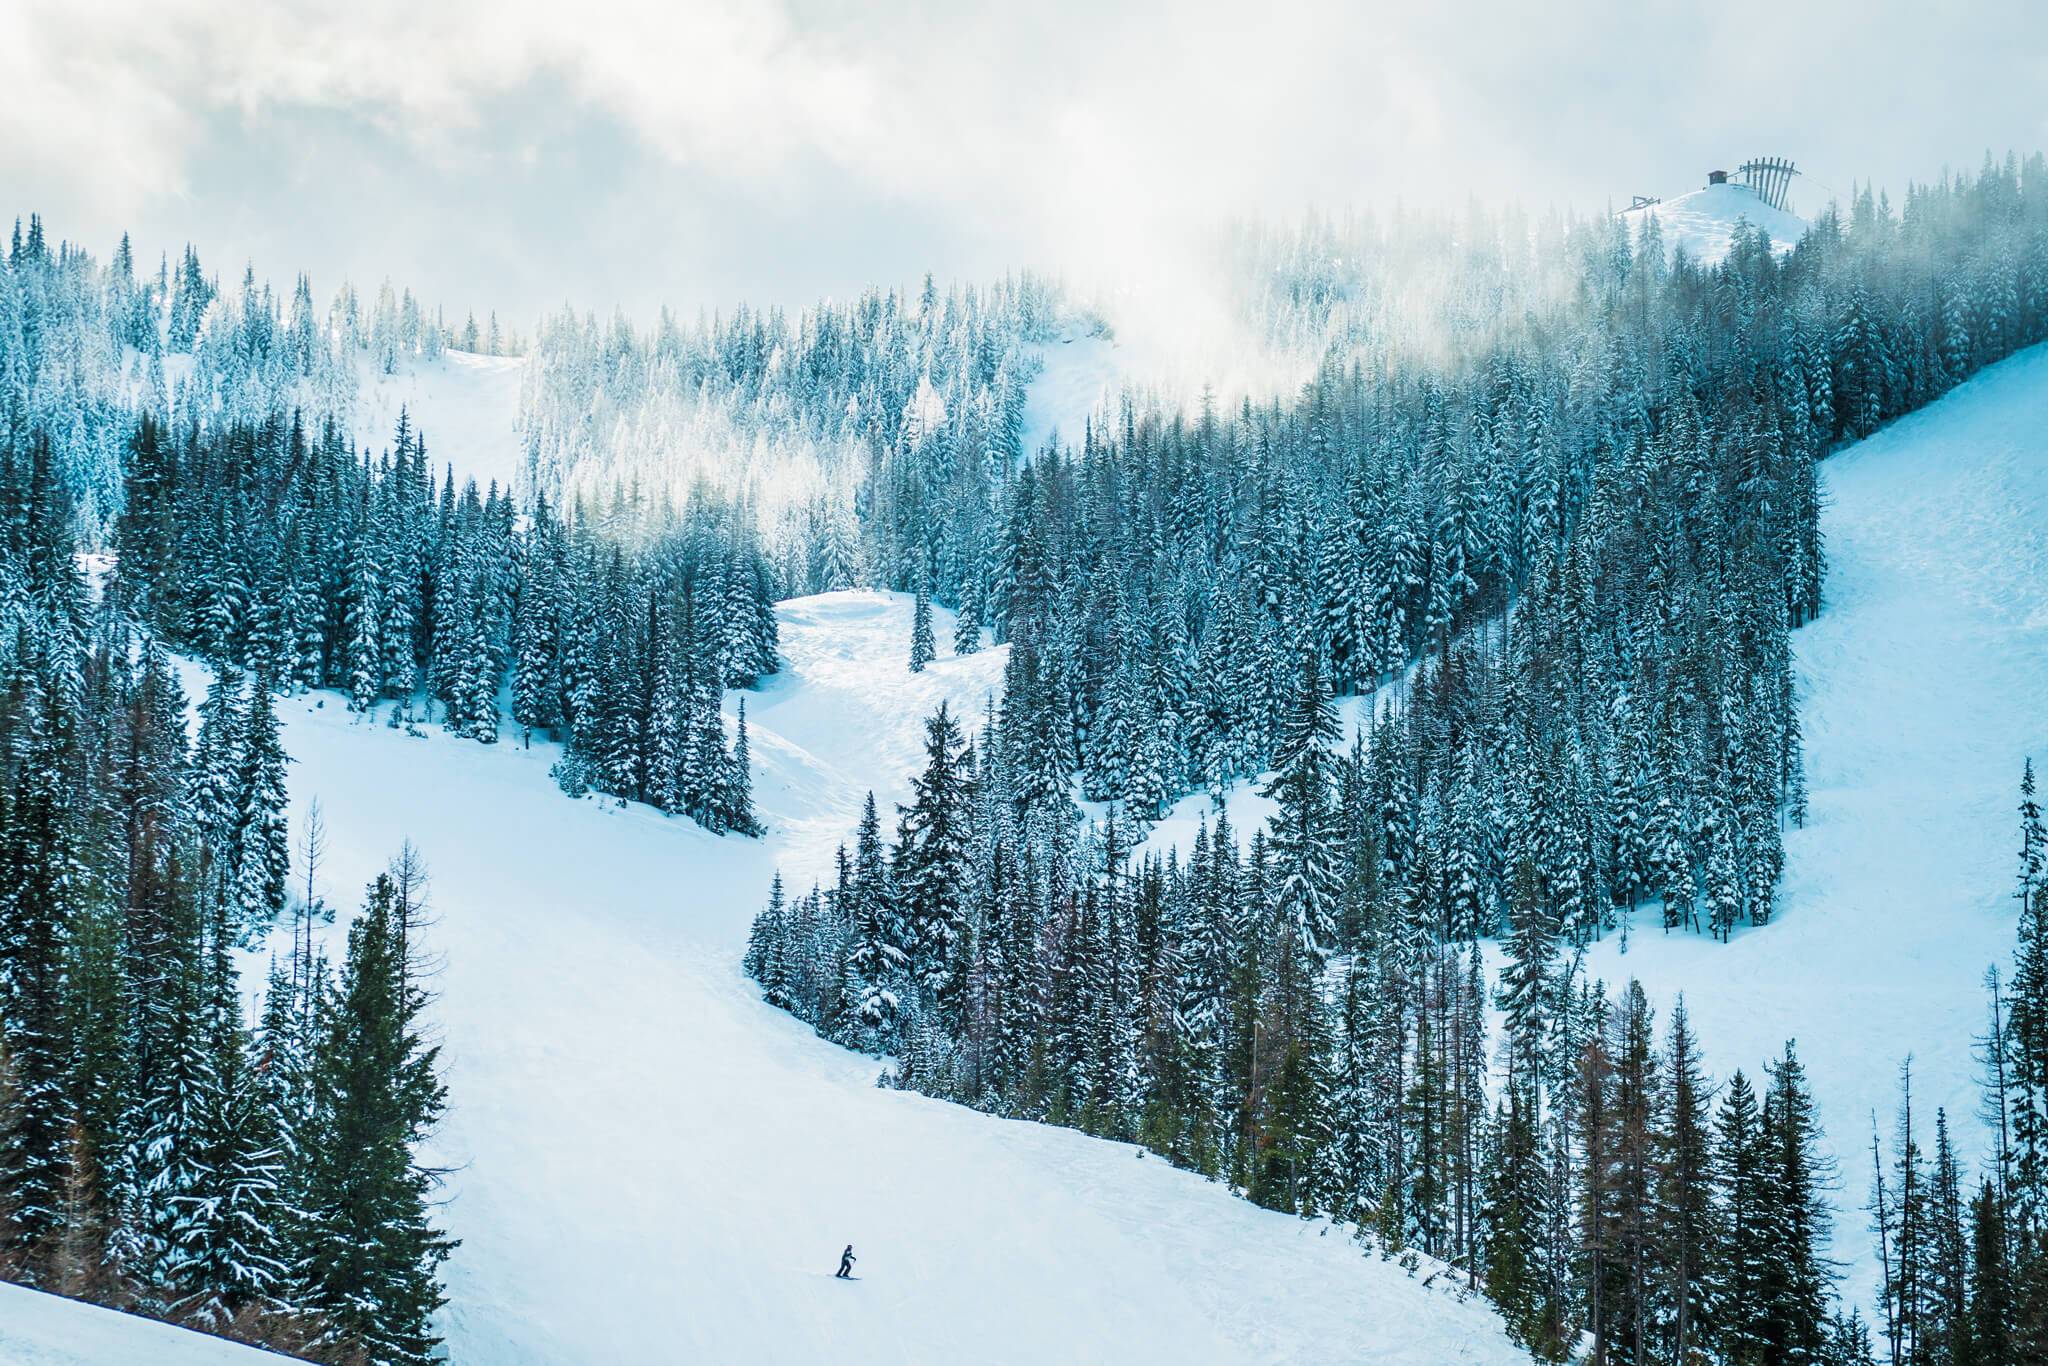 A person skis down a run at Silver Mountain Resort.